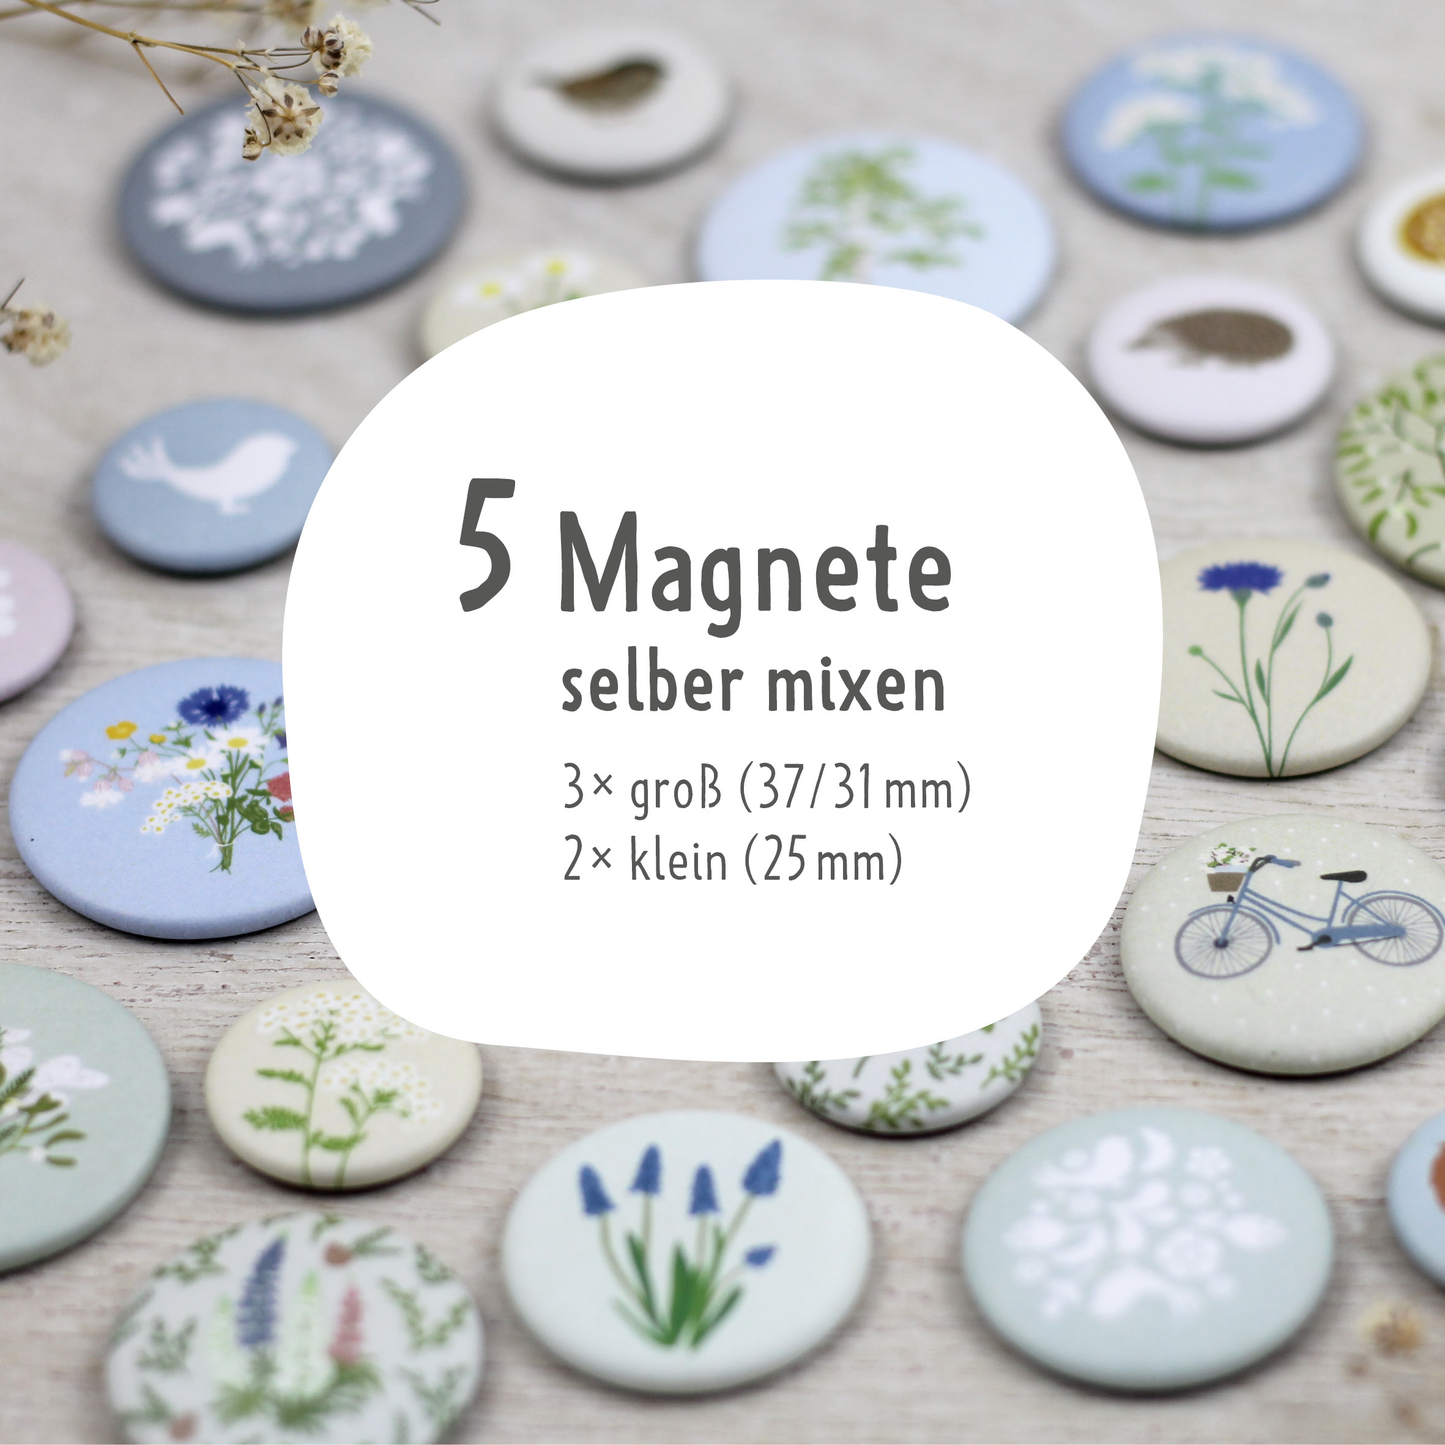 5 Magnete selber mixen (3× groß, 2× klein)